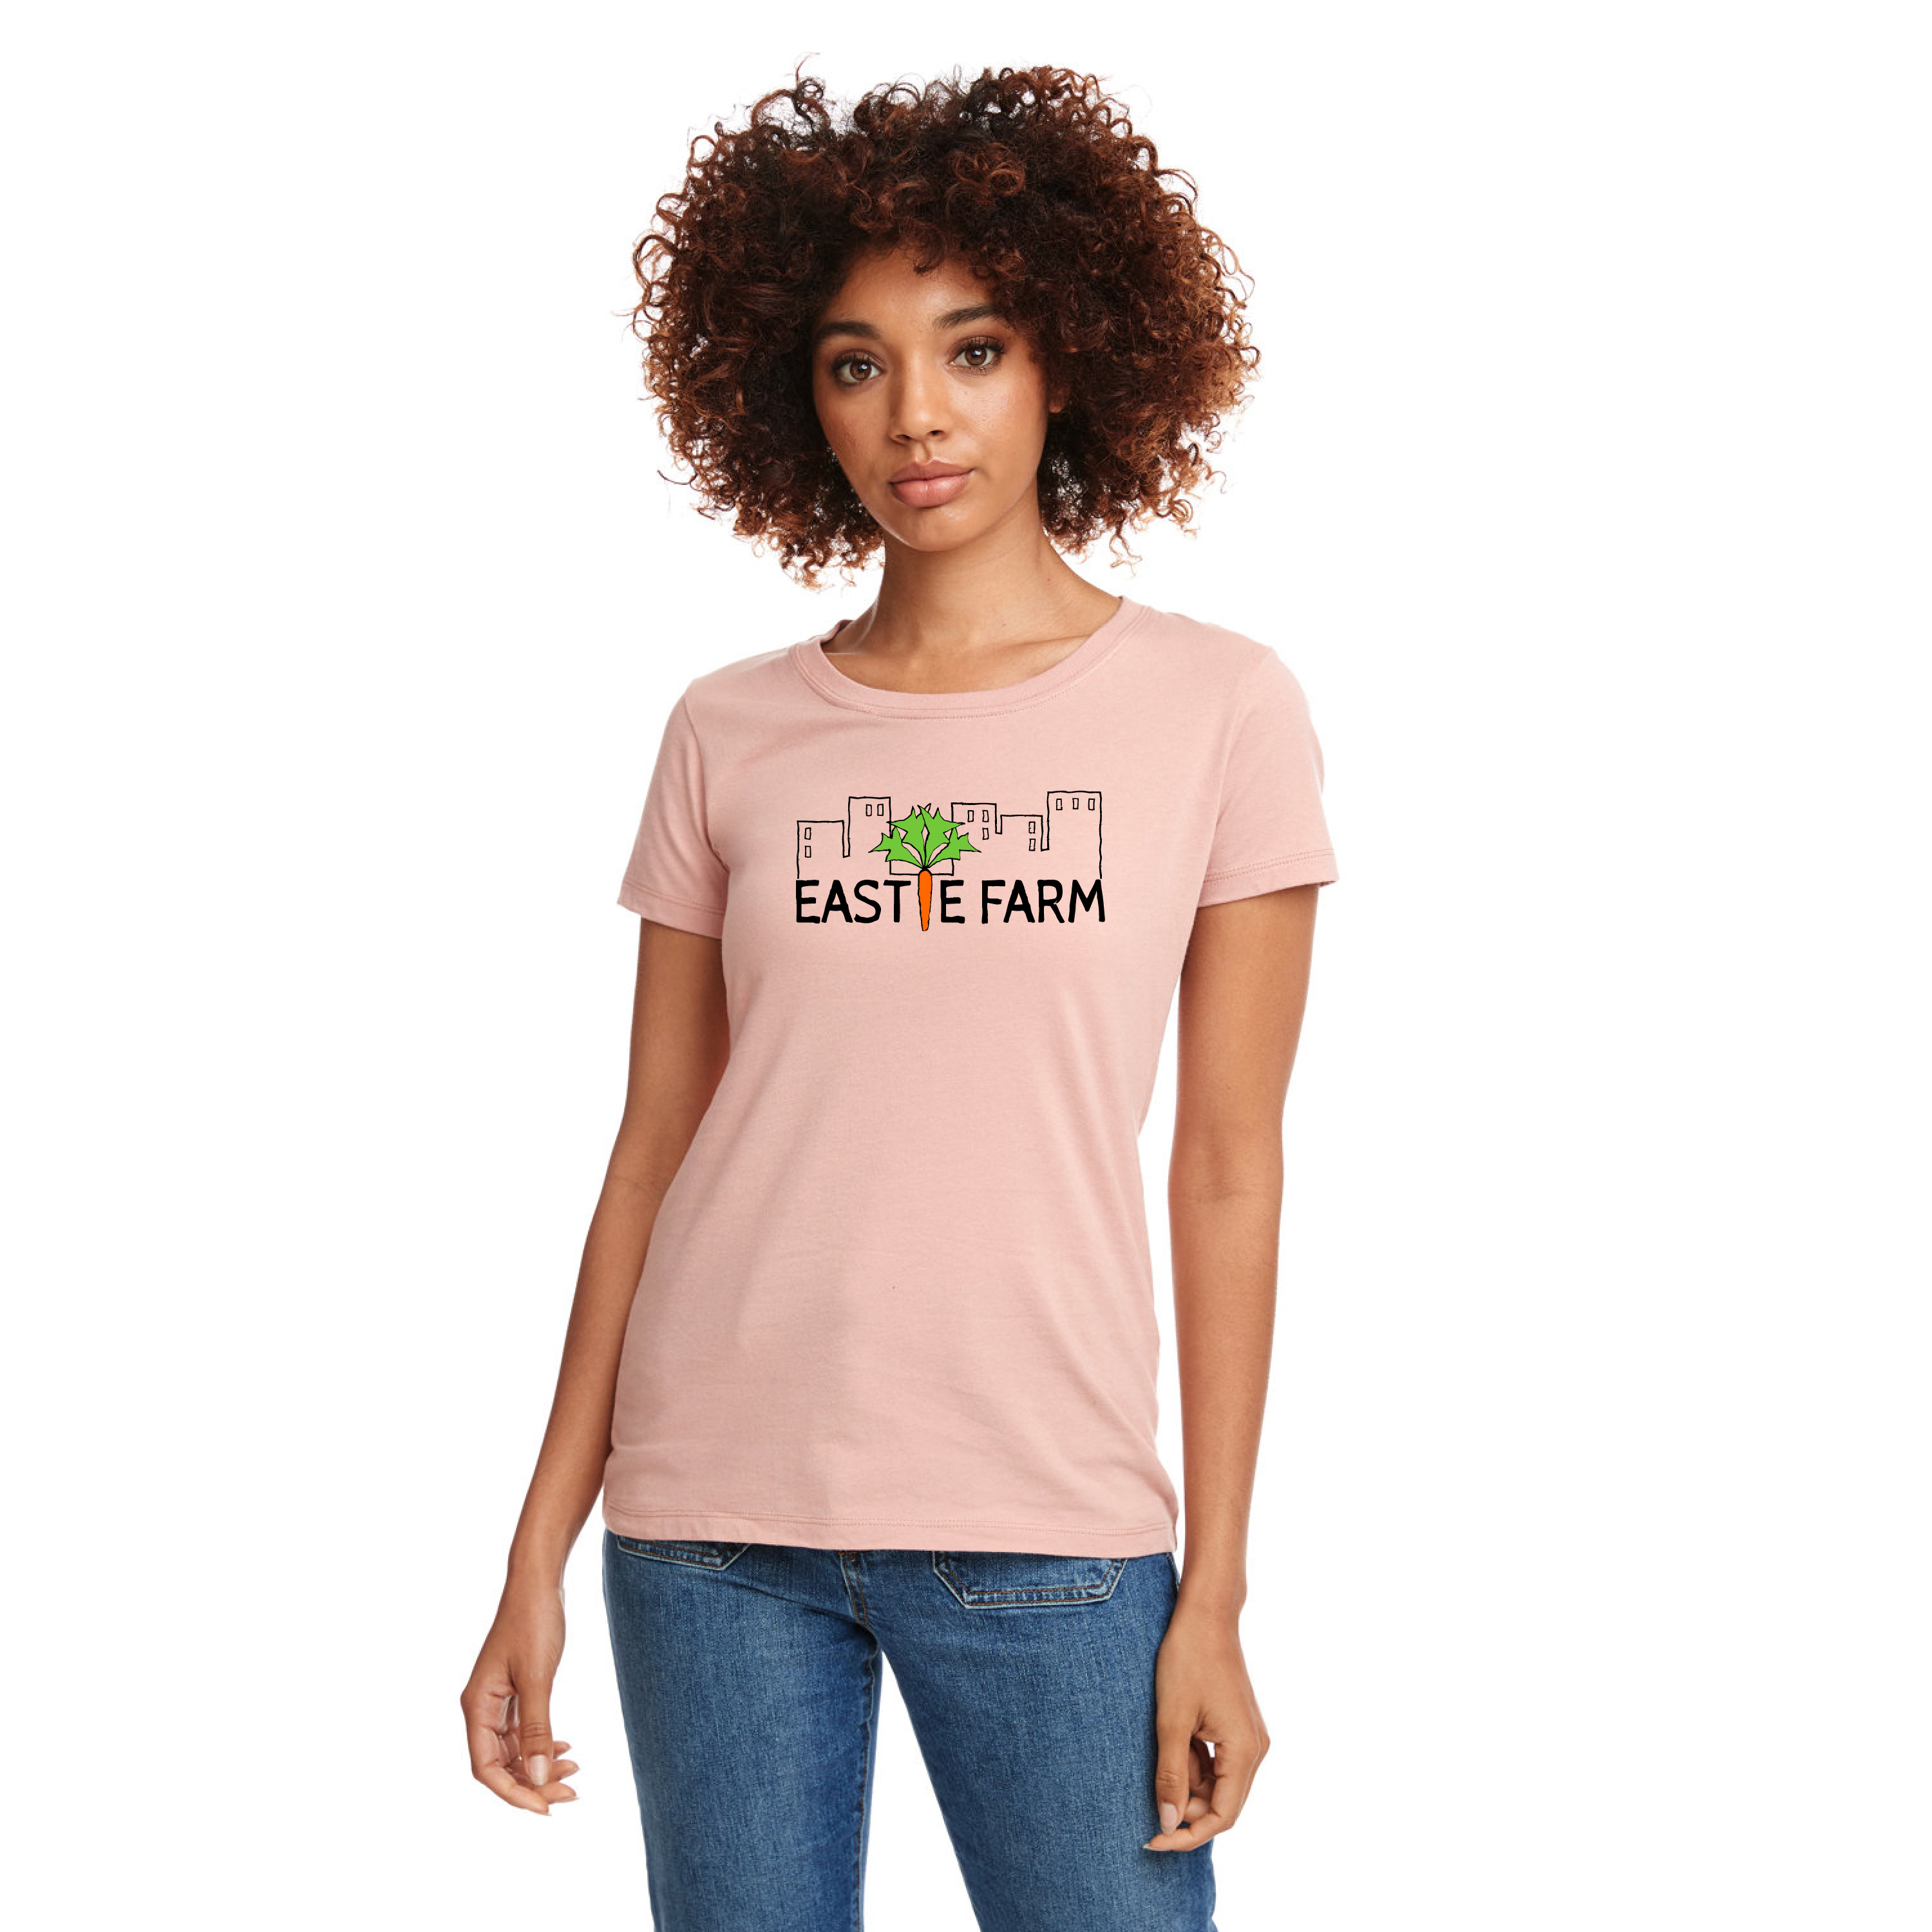 Eastie Farm Next Level Apparel Ladies' Ideal T-Shirt